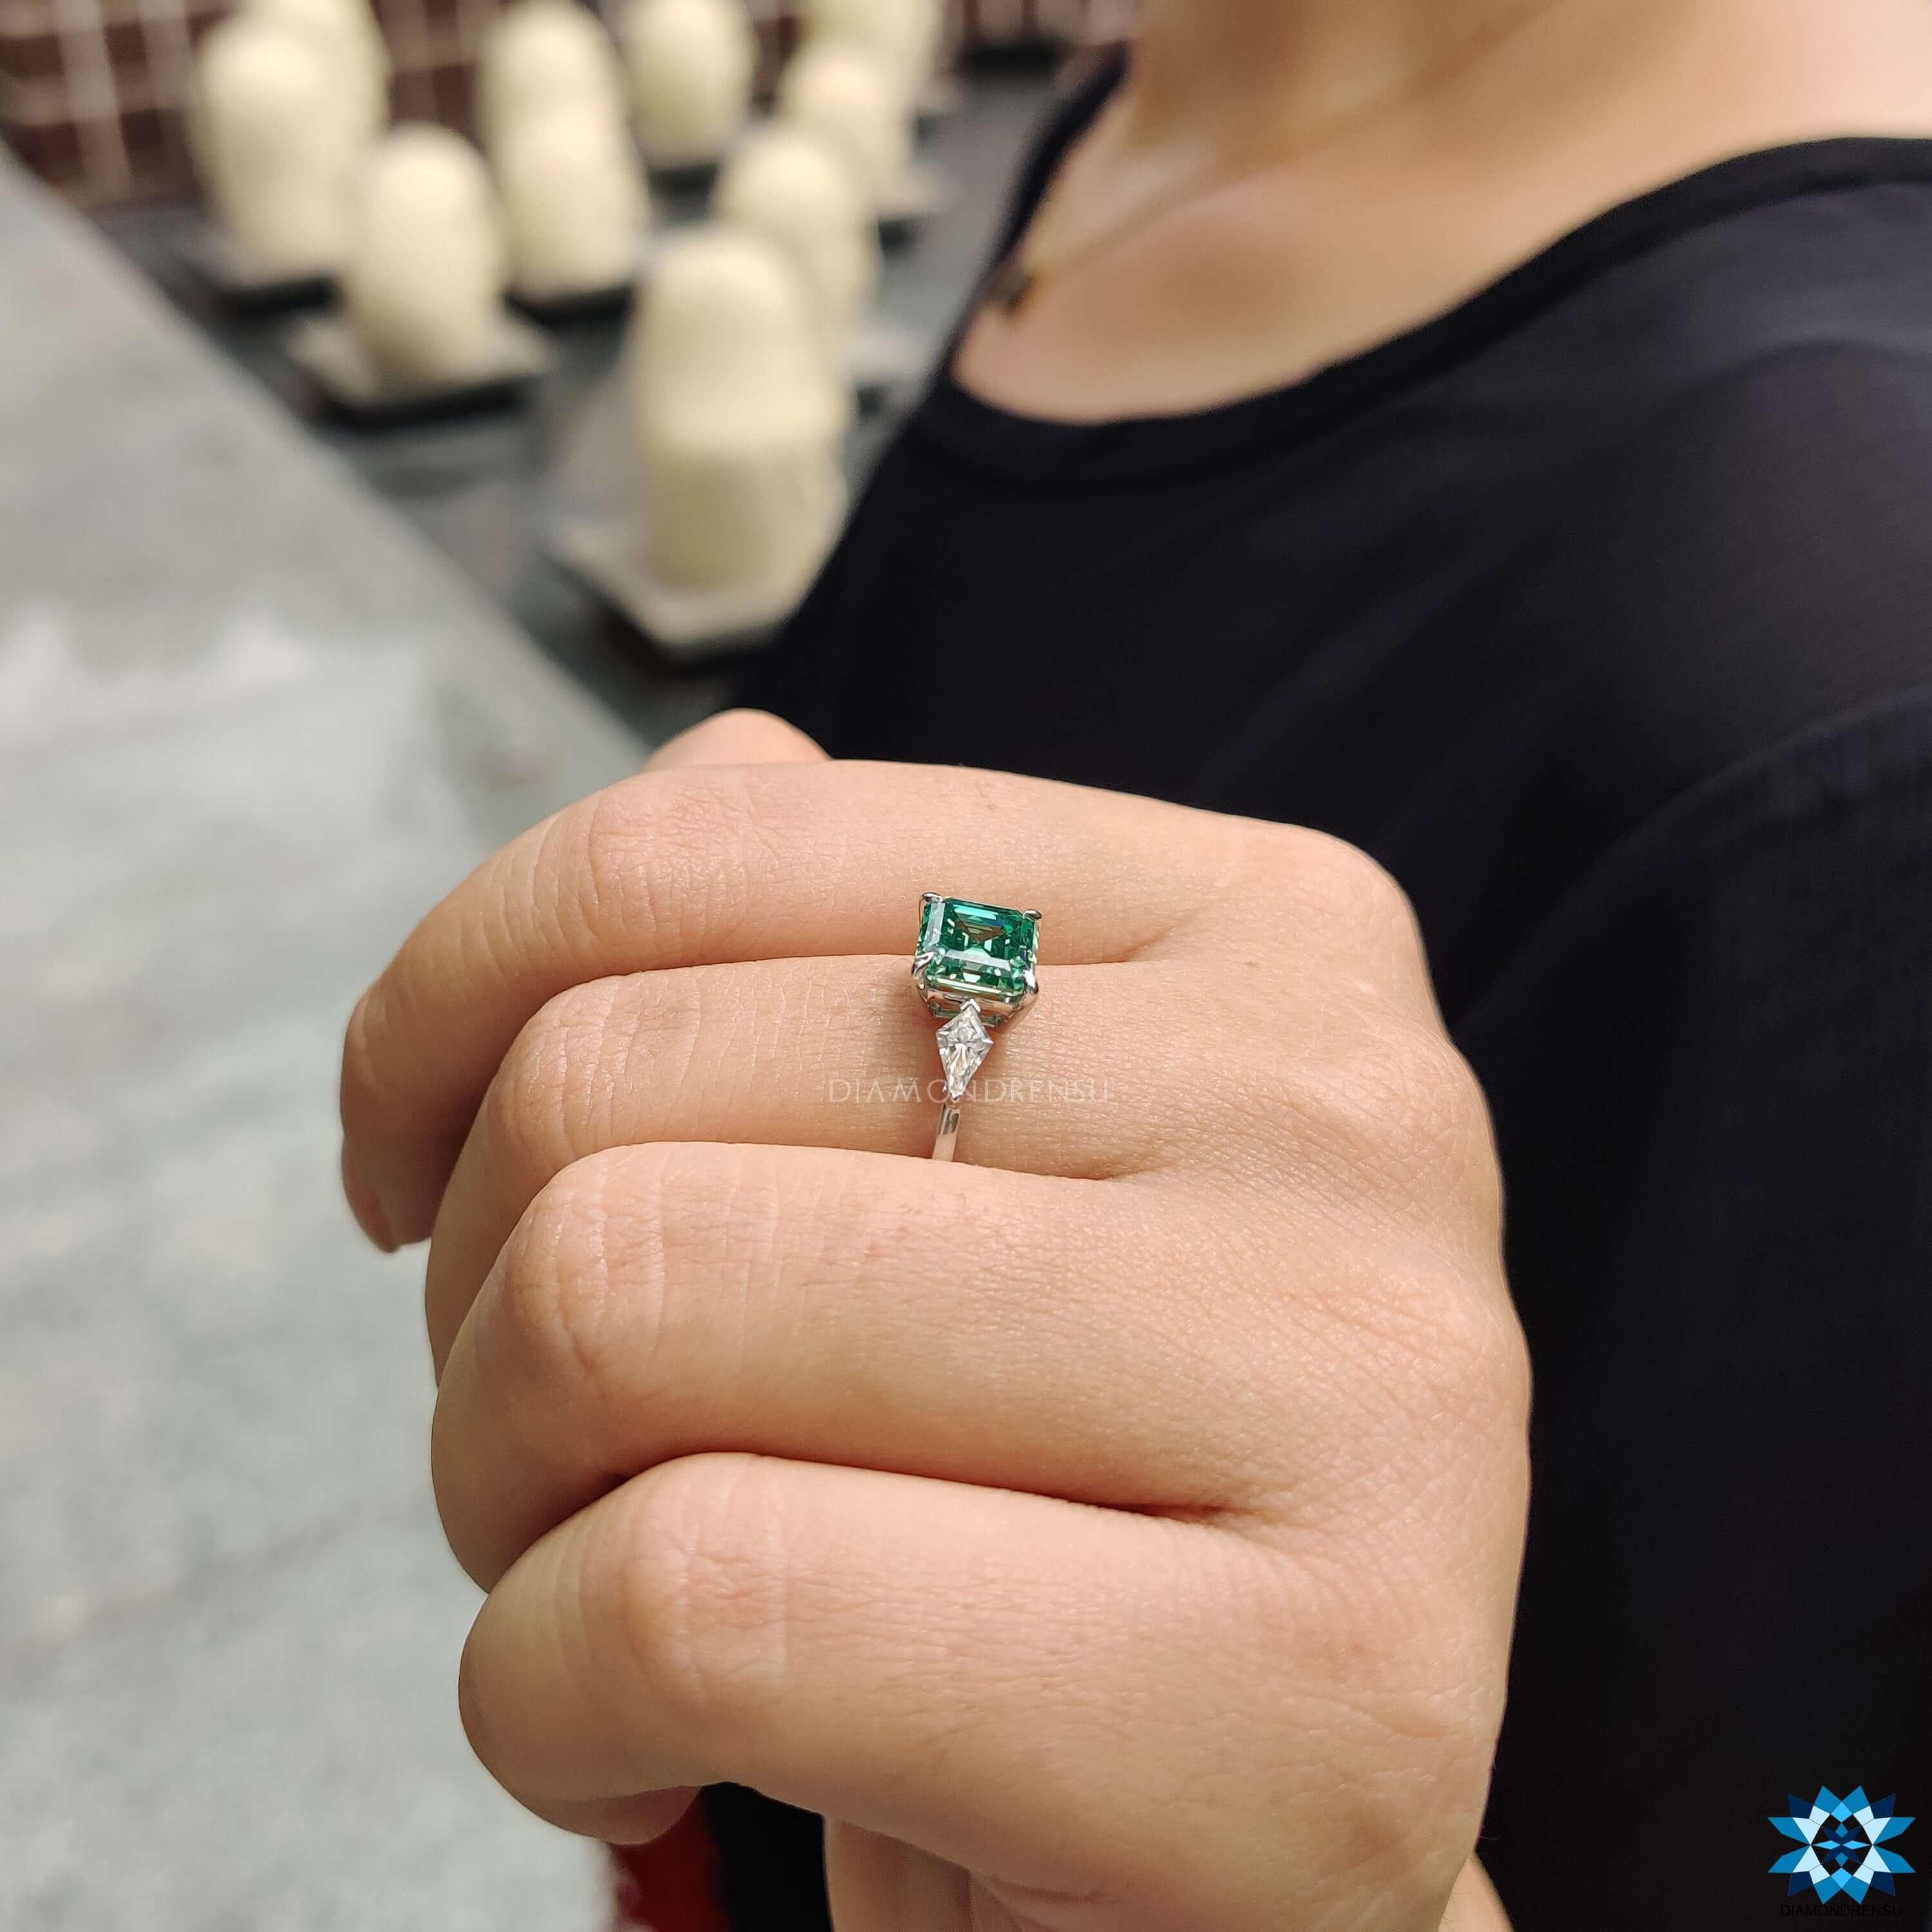 customized engagement rings - diamondrensu